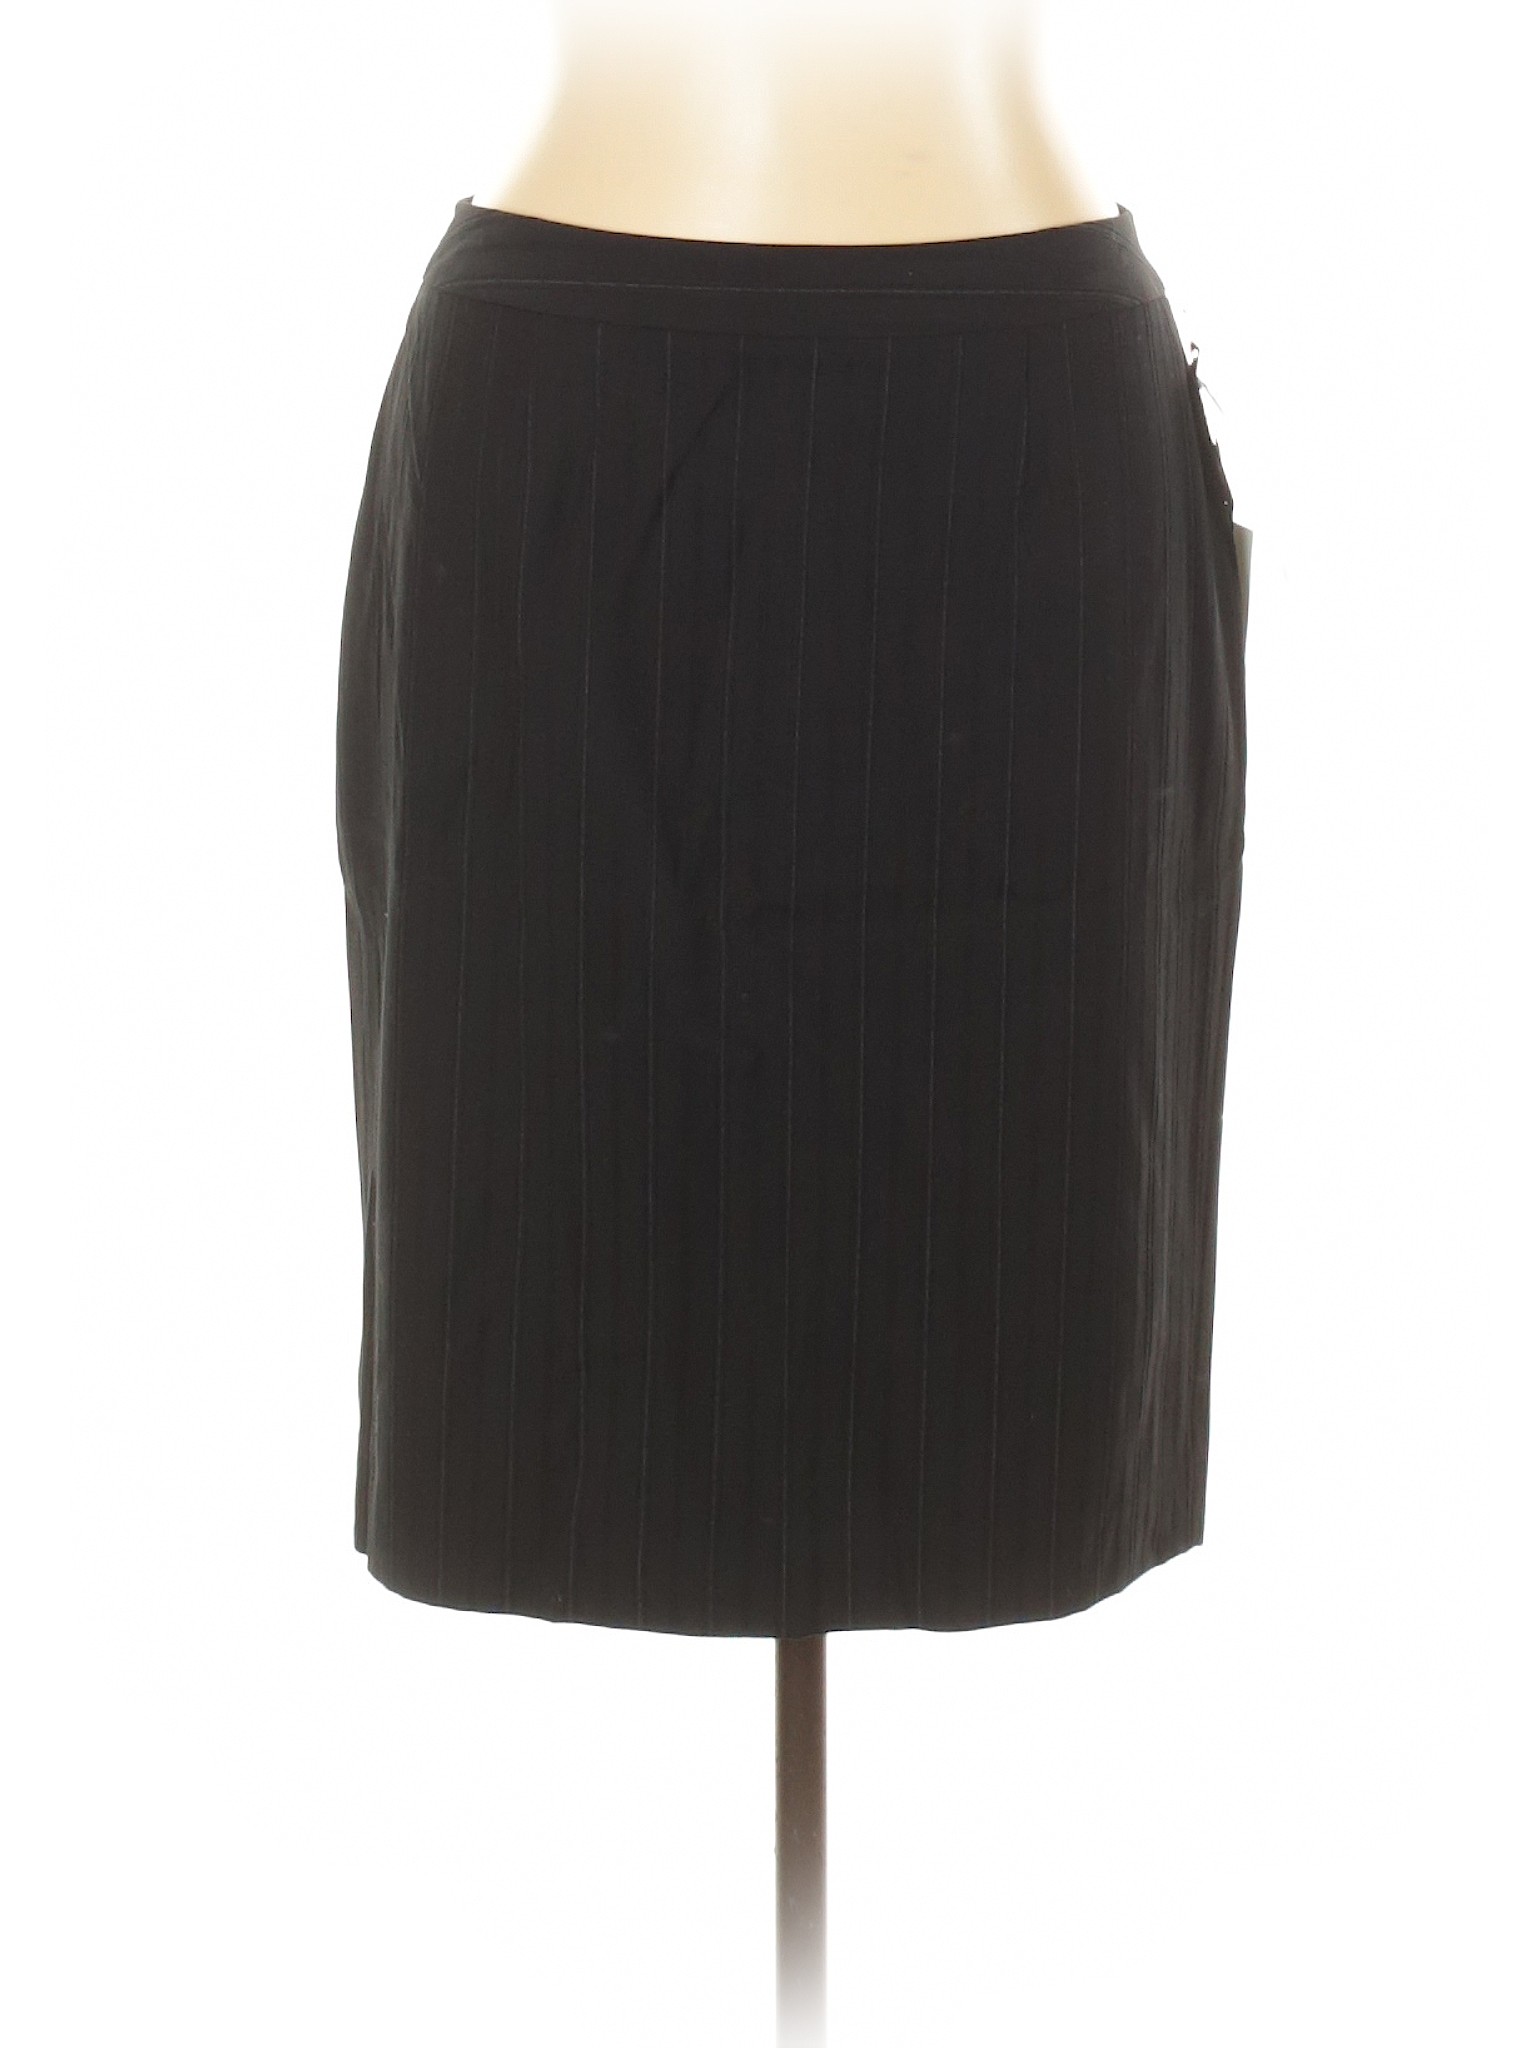 NWT Semantiks Women Black Casual Skirt 10 Petites | eBay